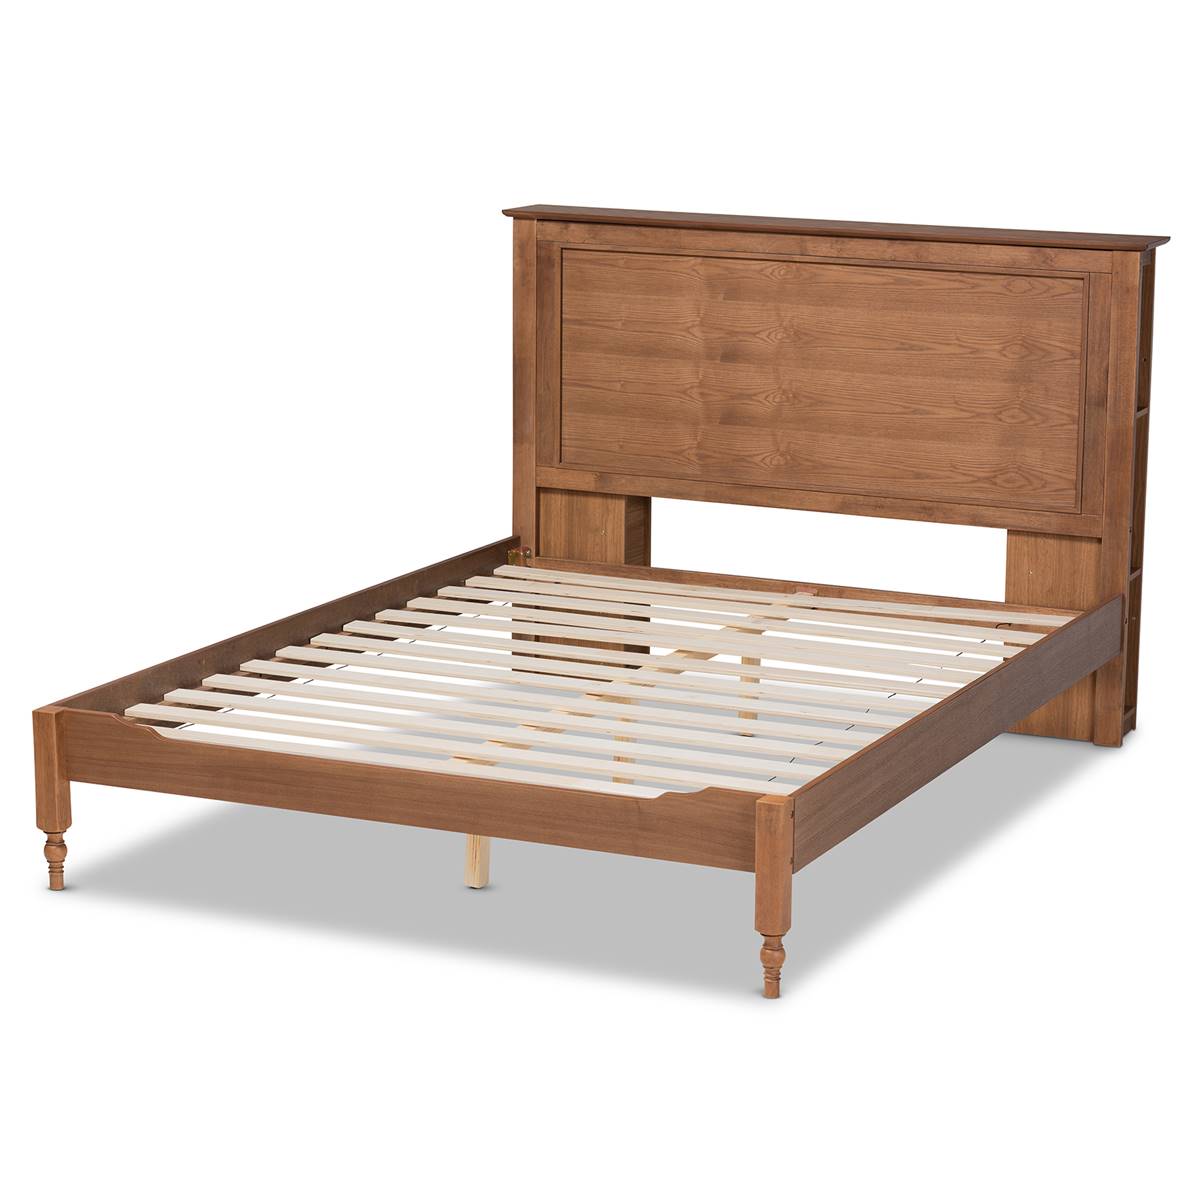 Baxton Studio Danielle Full Size Platform Bed With Shelves